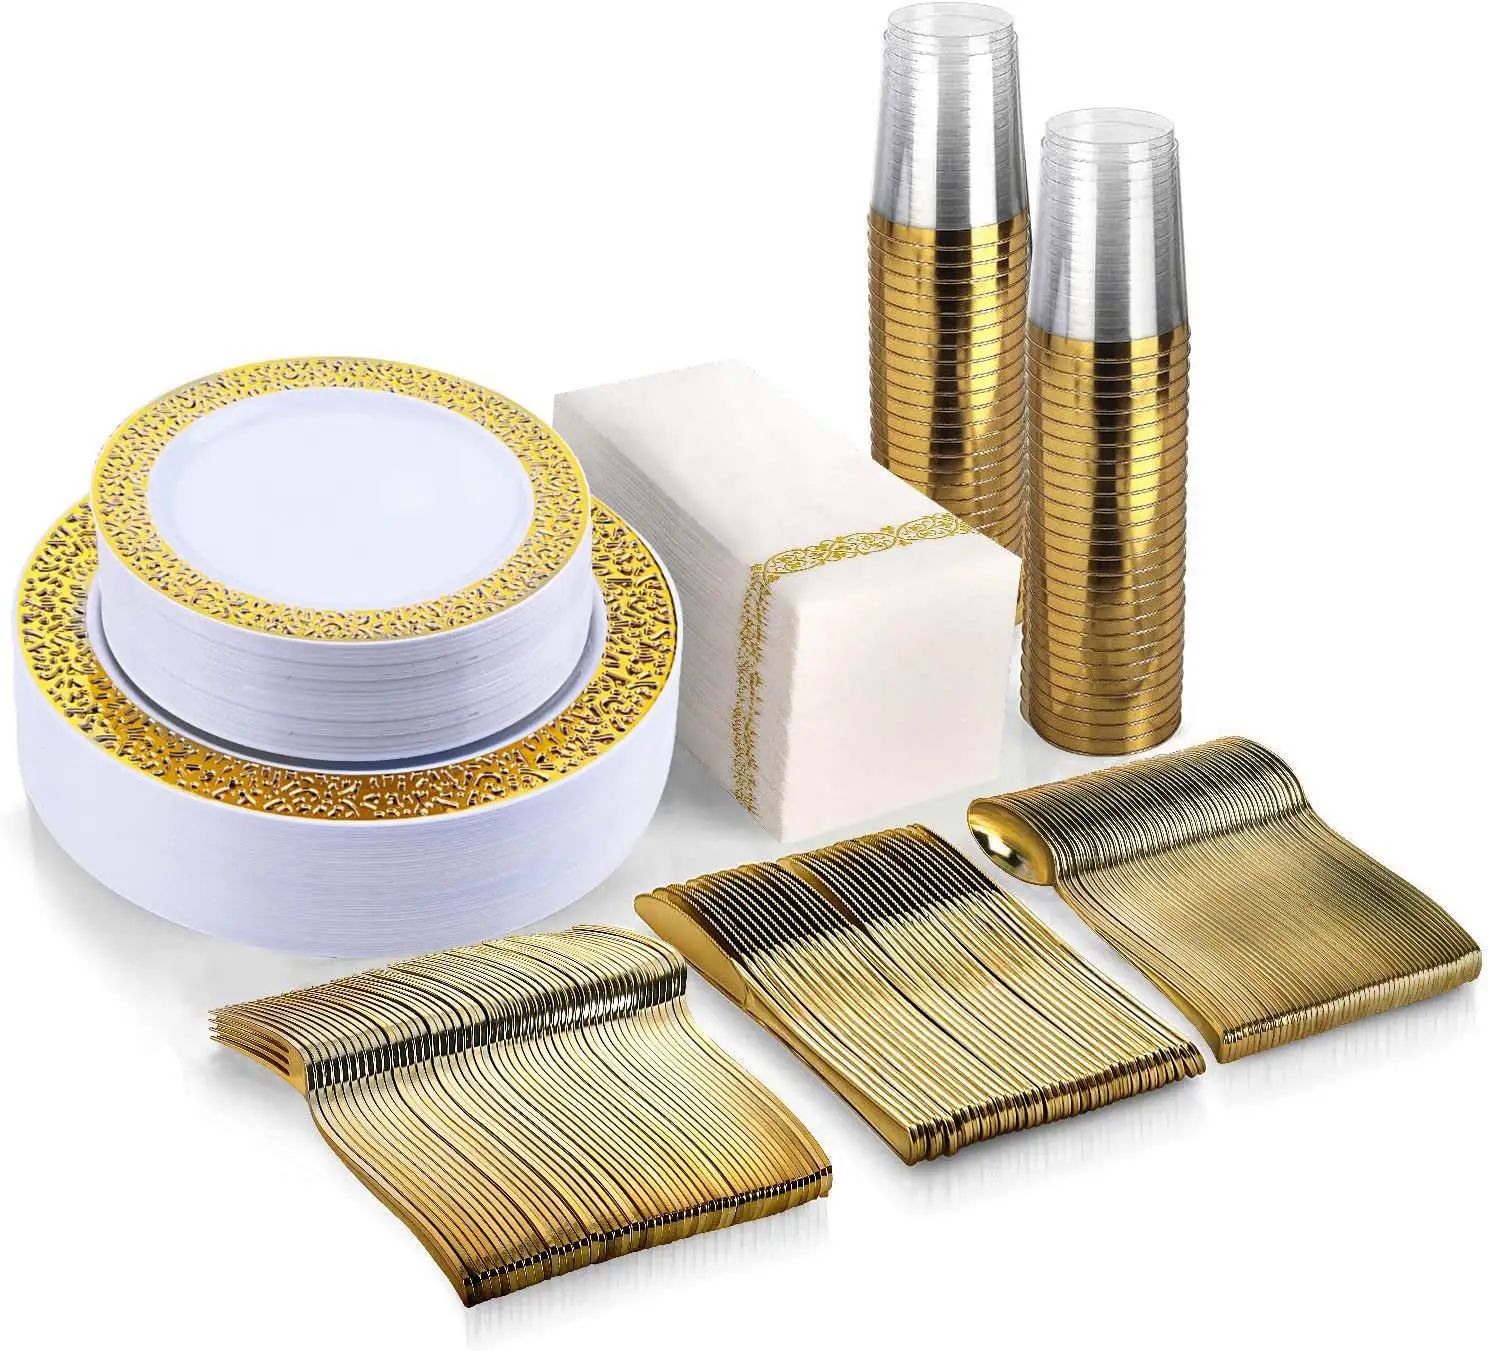 थोक शादी की जन्मदिन की वार्षिक पार्टी दौर सोने रिम प्लास्टिक बर्तन सेट डिस्पोजेबल प्लेटों कप कांटा चम्मच चाकू नैपकिन